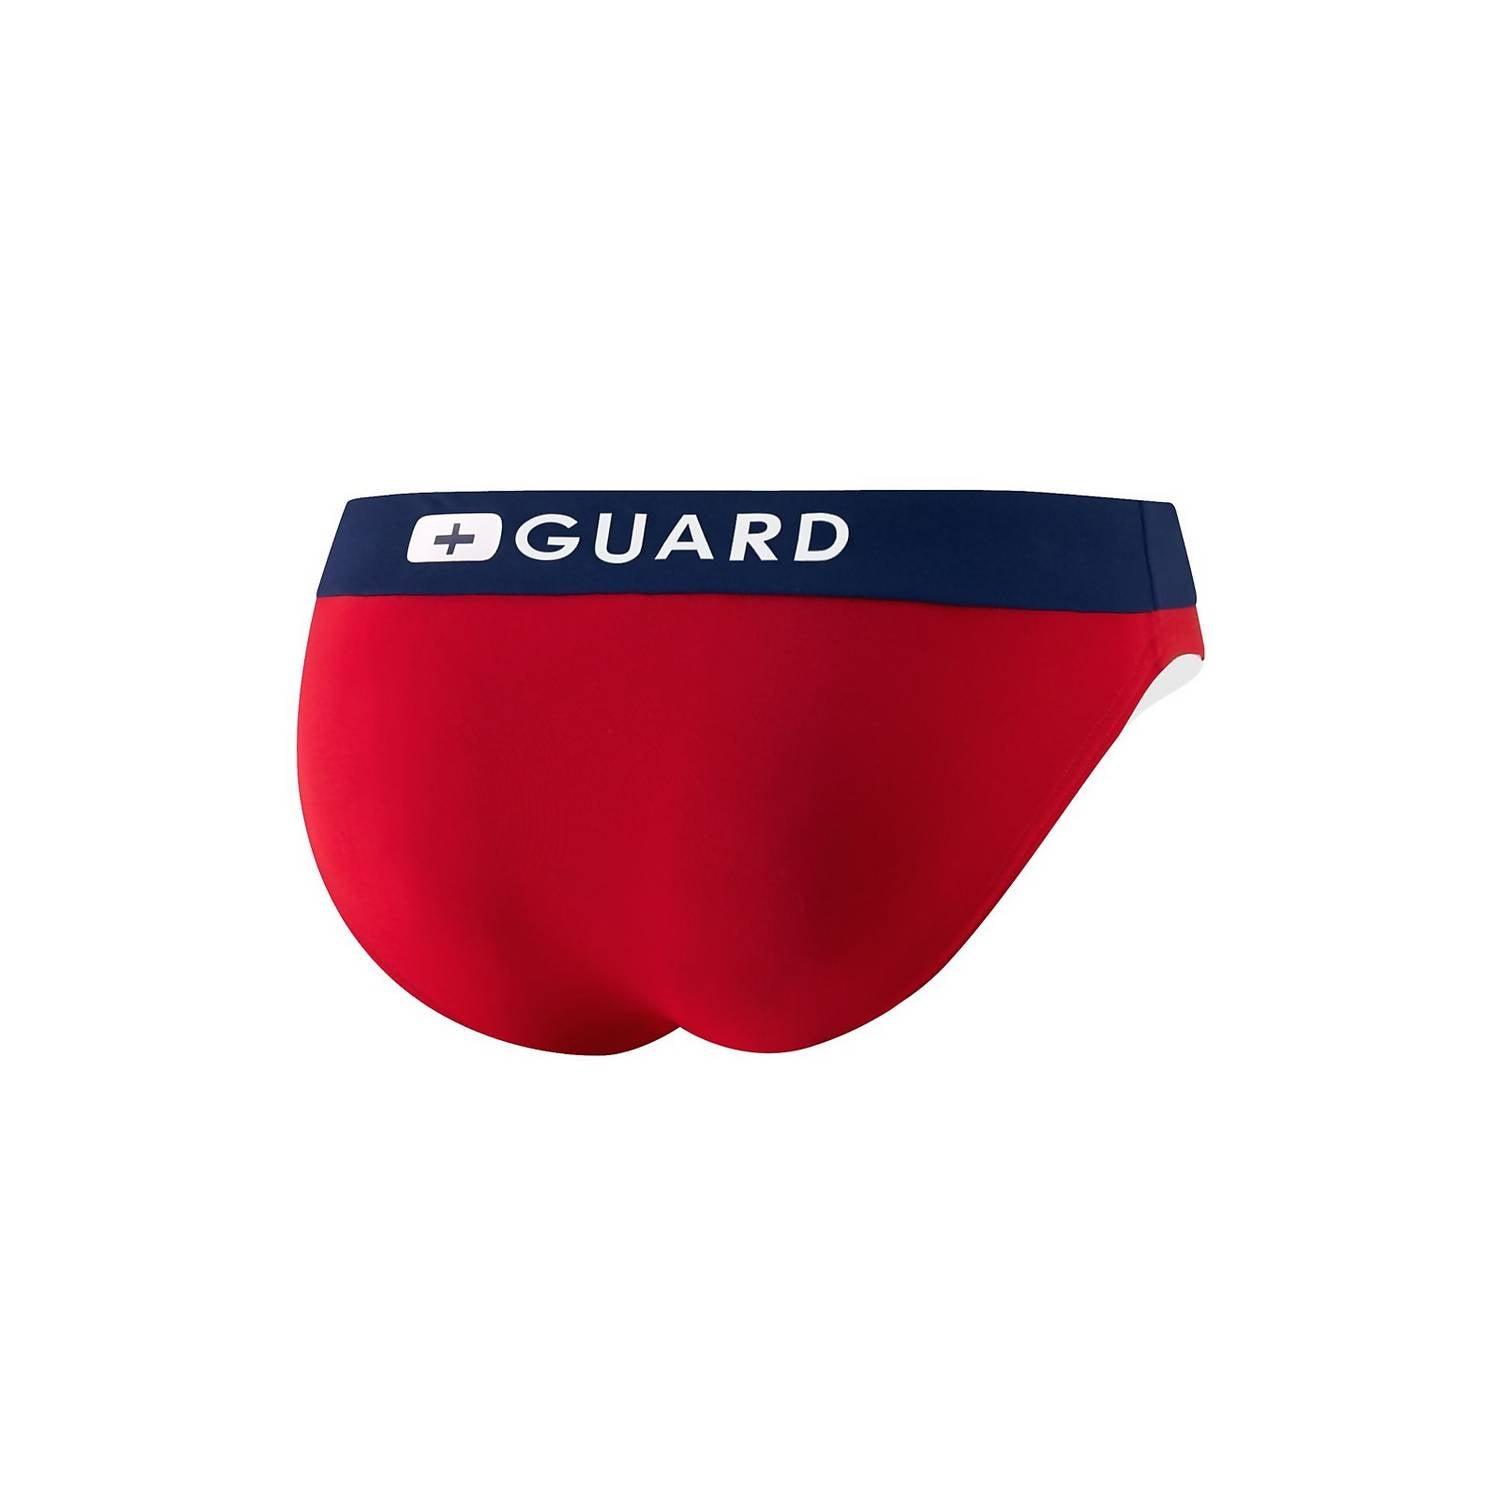 Two-Piece Lifeguard Swimwear - Two-Piece Lifeguard Swimsuits